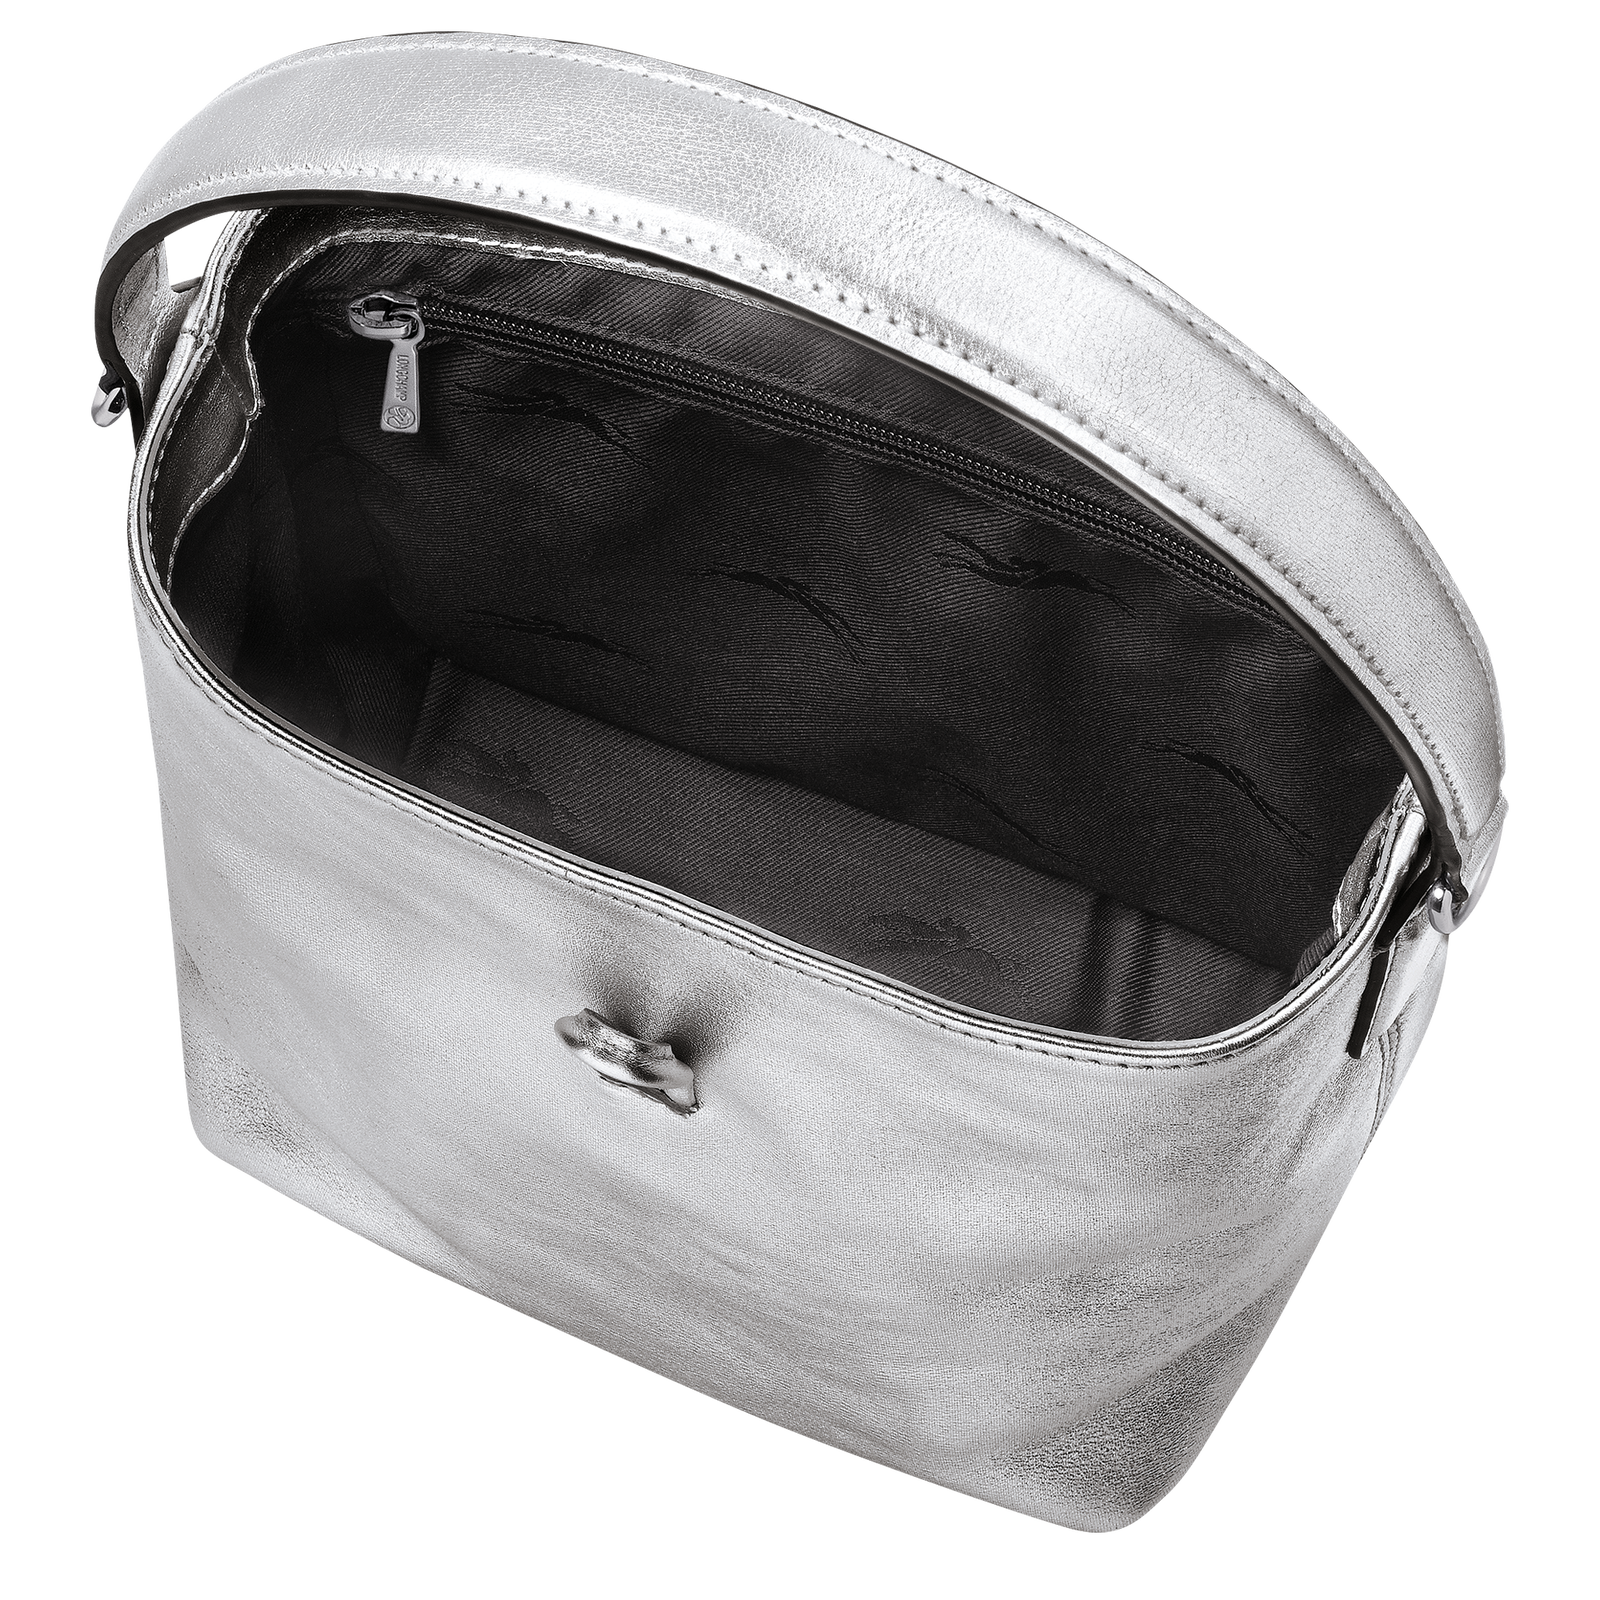 Roseau XS Bucket bag Silver - Leather